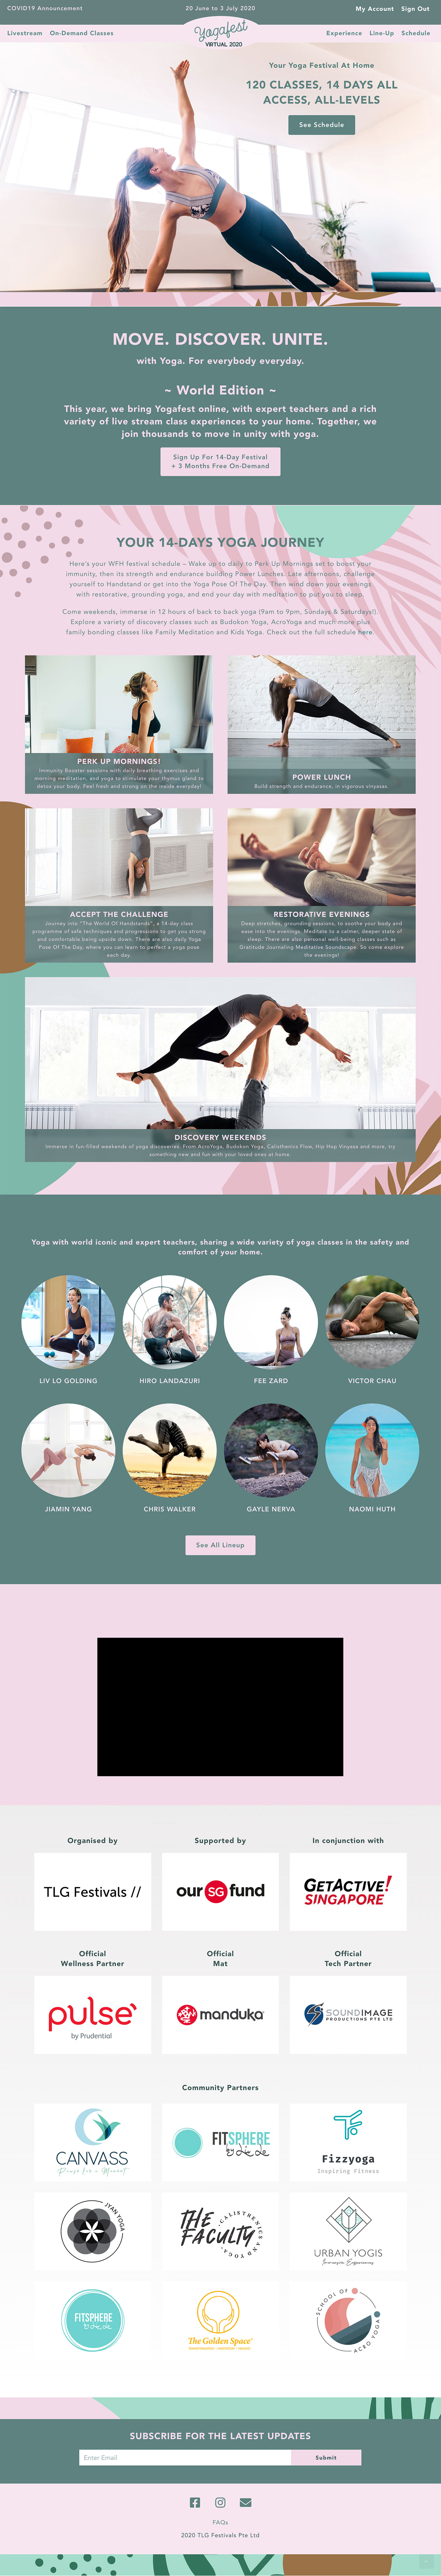 Yogafest Virtual 2020